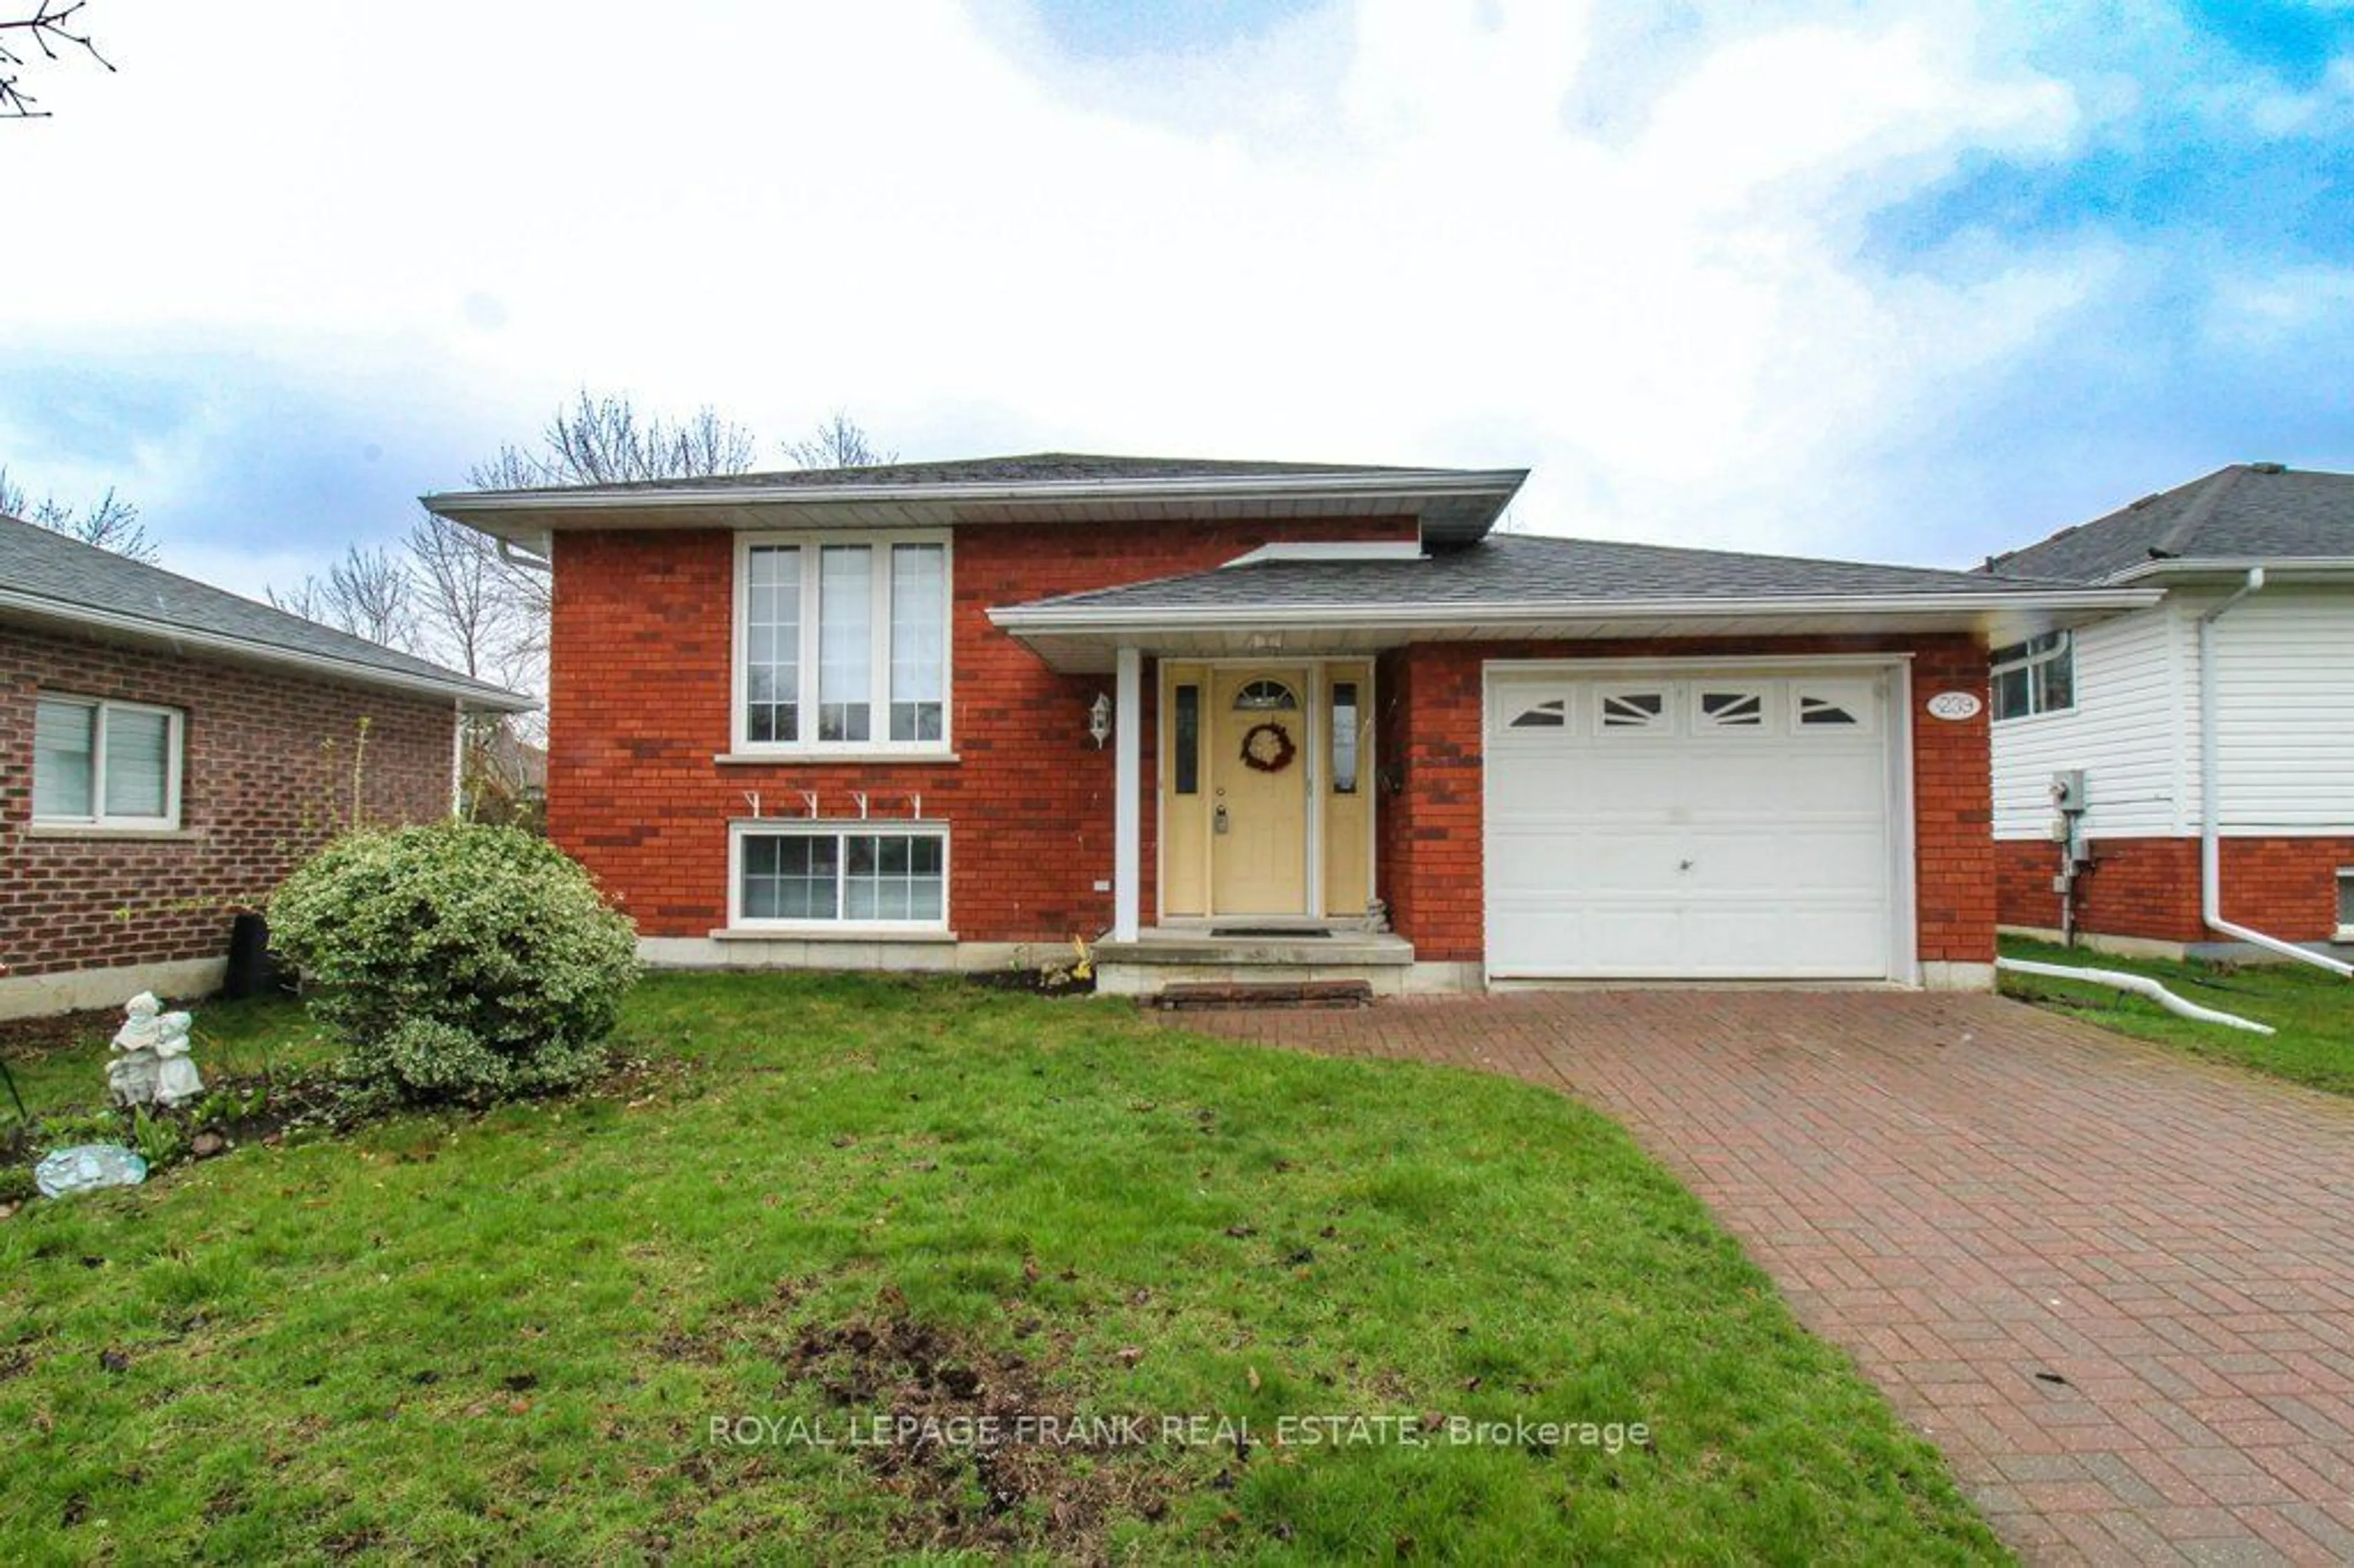 Home with brick exterior material for 239 Franmor Dr, Peterborough Ontario K9H 7M4